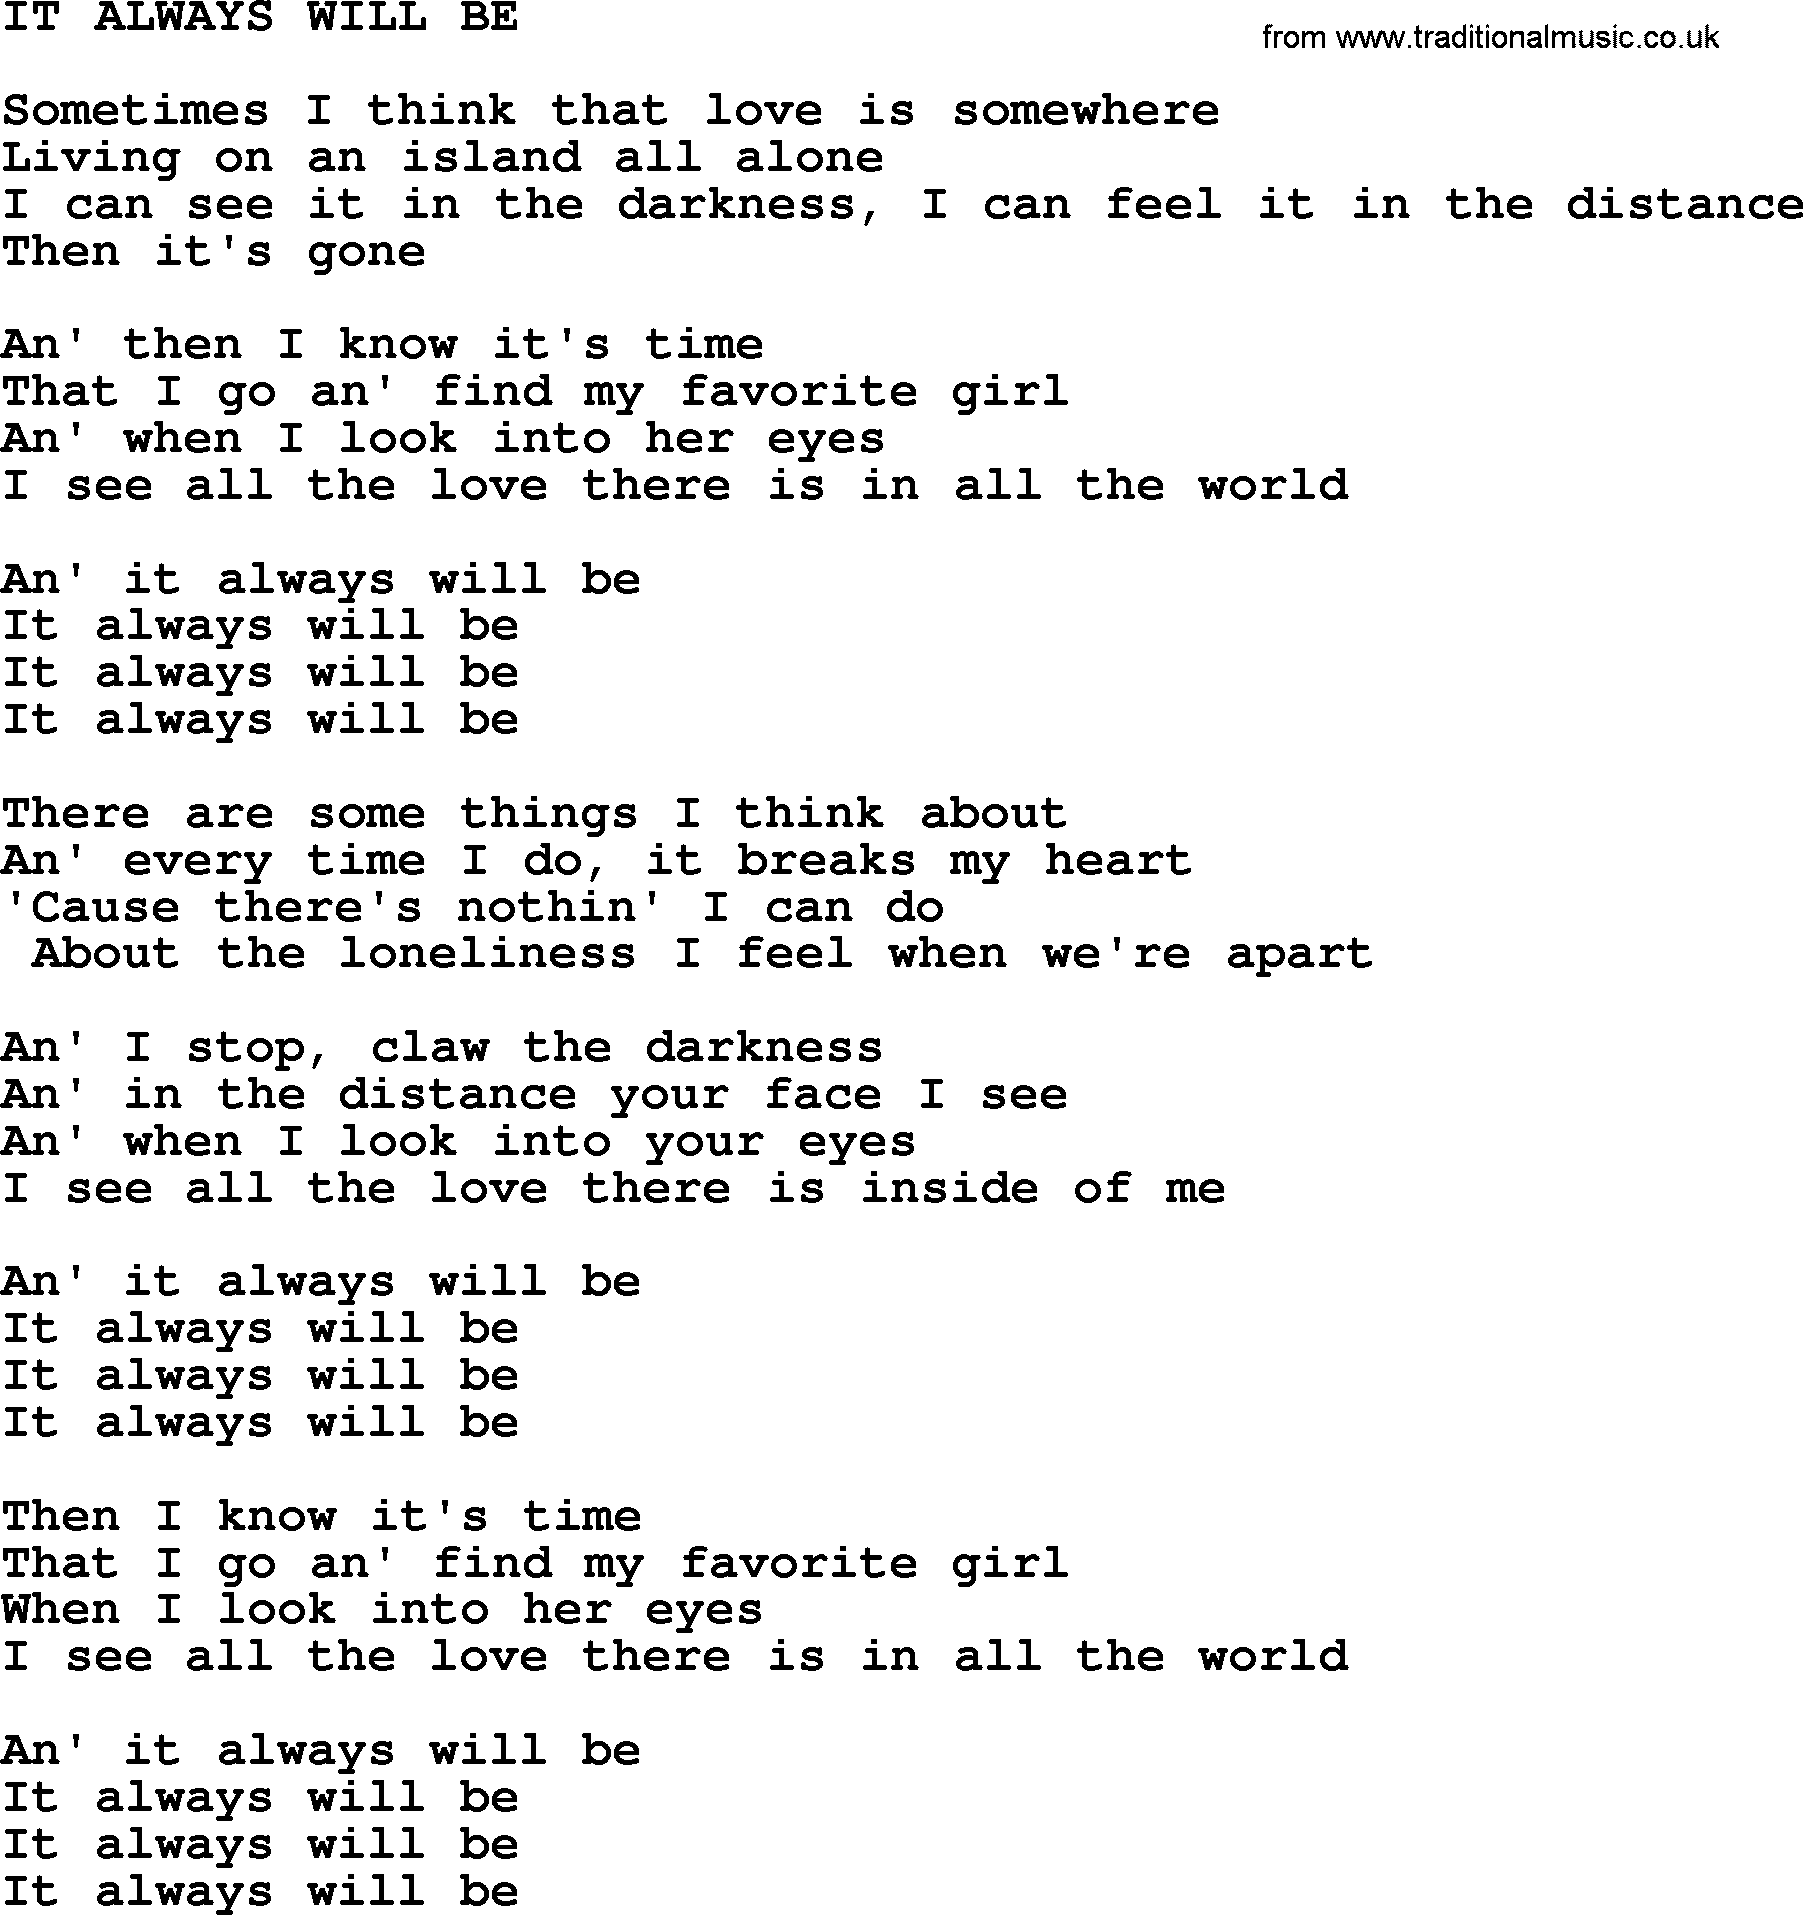 Merle Haggard song: It Always Will Be, lyrics.